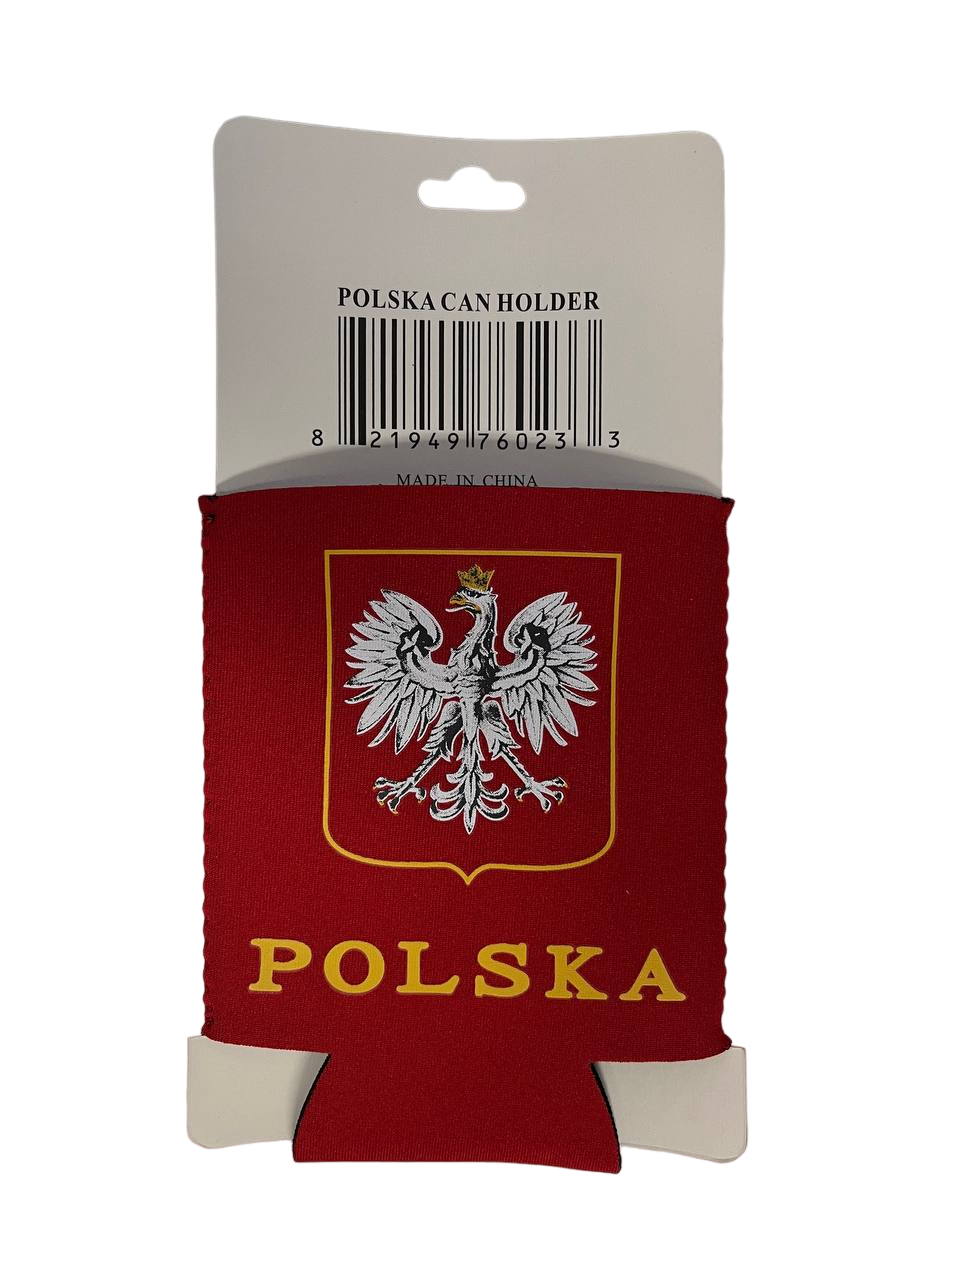 Poland Can Jacket RED Polska Whit Polish Eagle